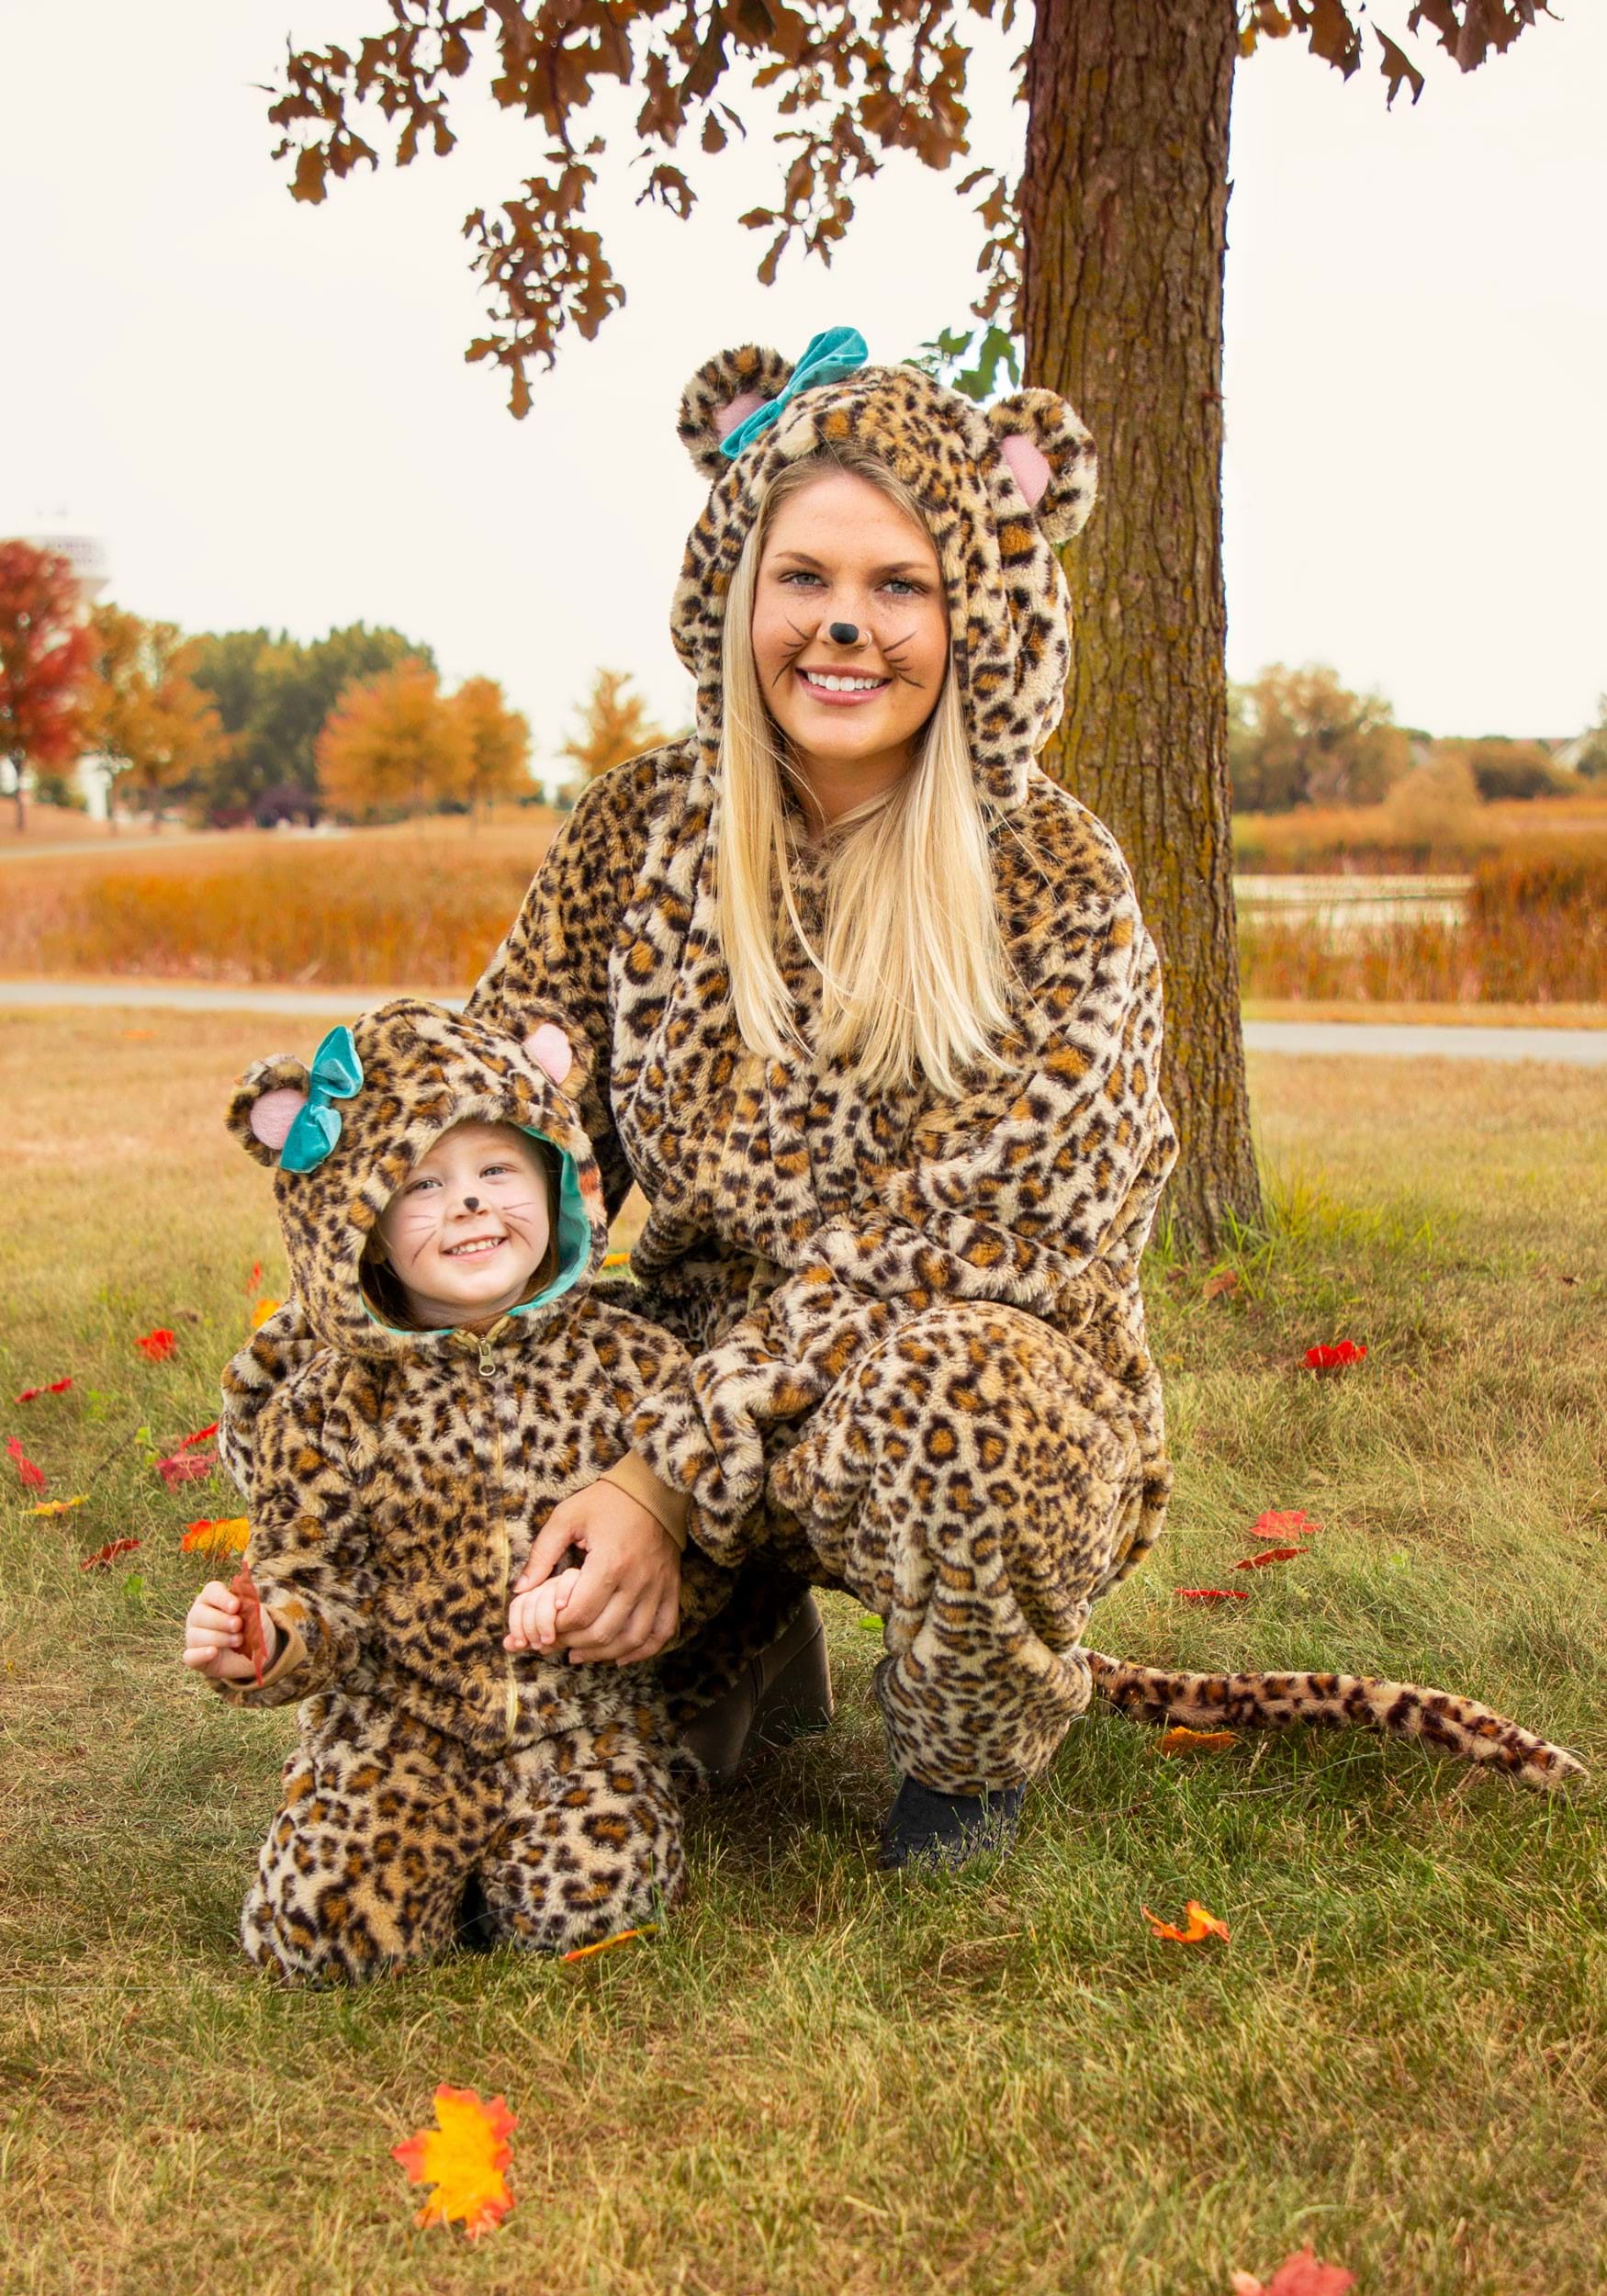 Posh Peanut Lana Leopard Toddler Costume